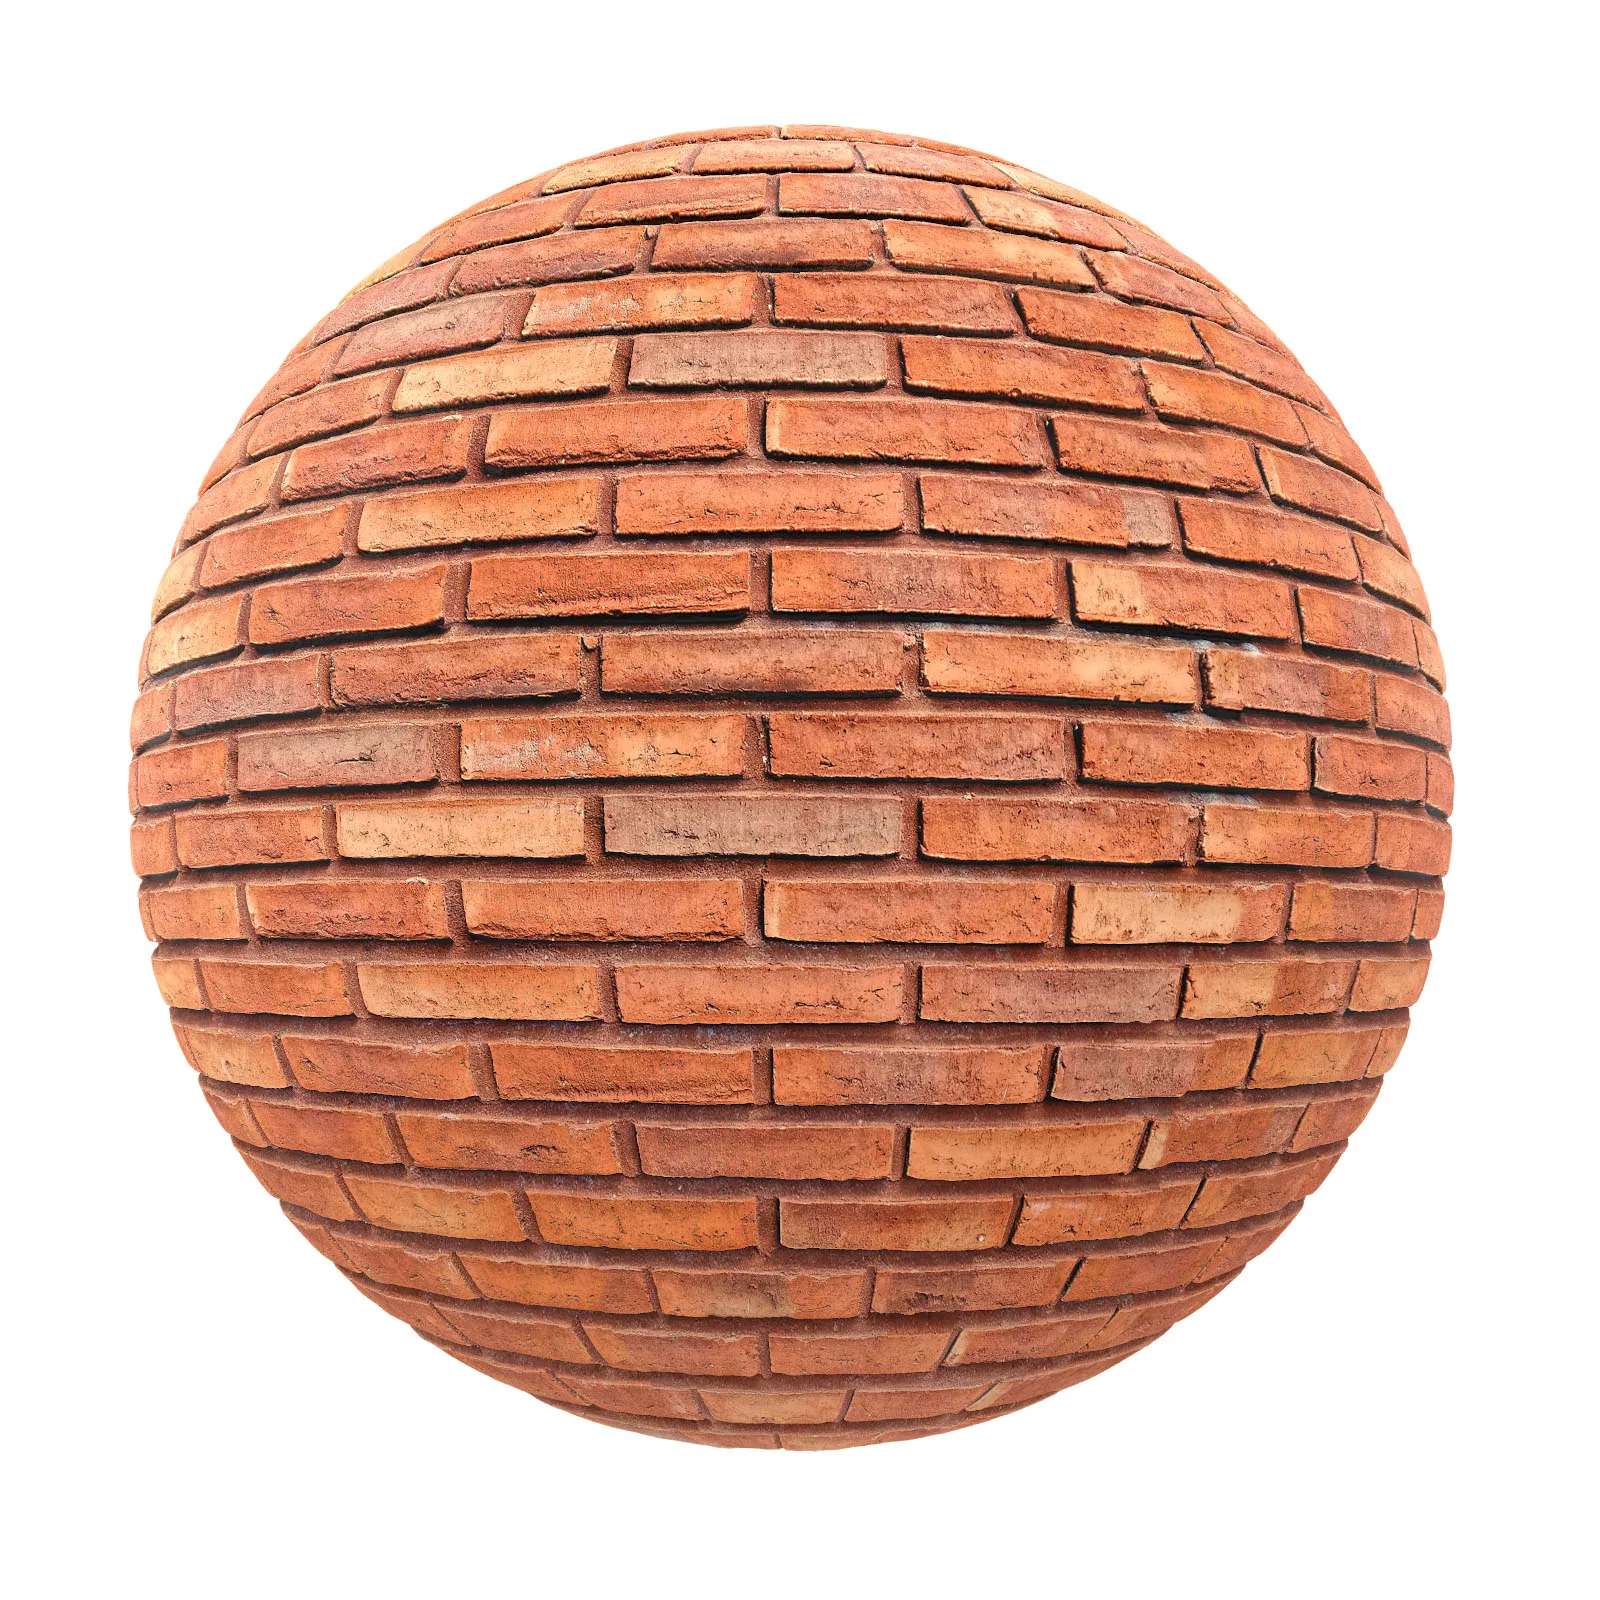 PBR CGAXIS TEXTURES – BRICK – Orange Brick Wall 4